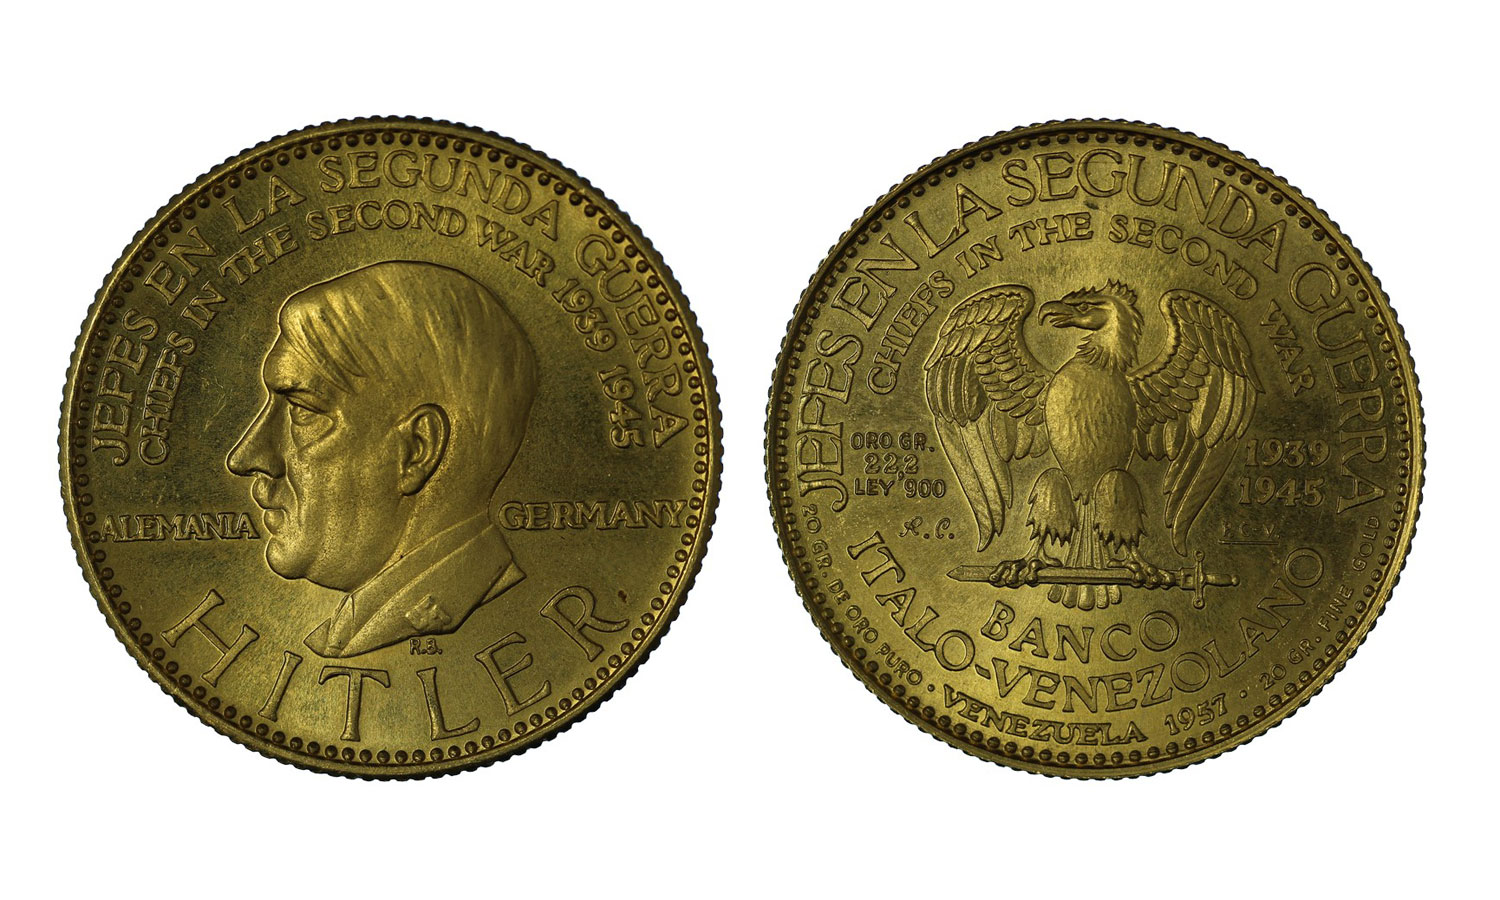 Banco Italo Venezuelano "Hitler" - Caciques gr. 22,20 in oro 900/000